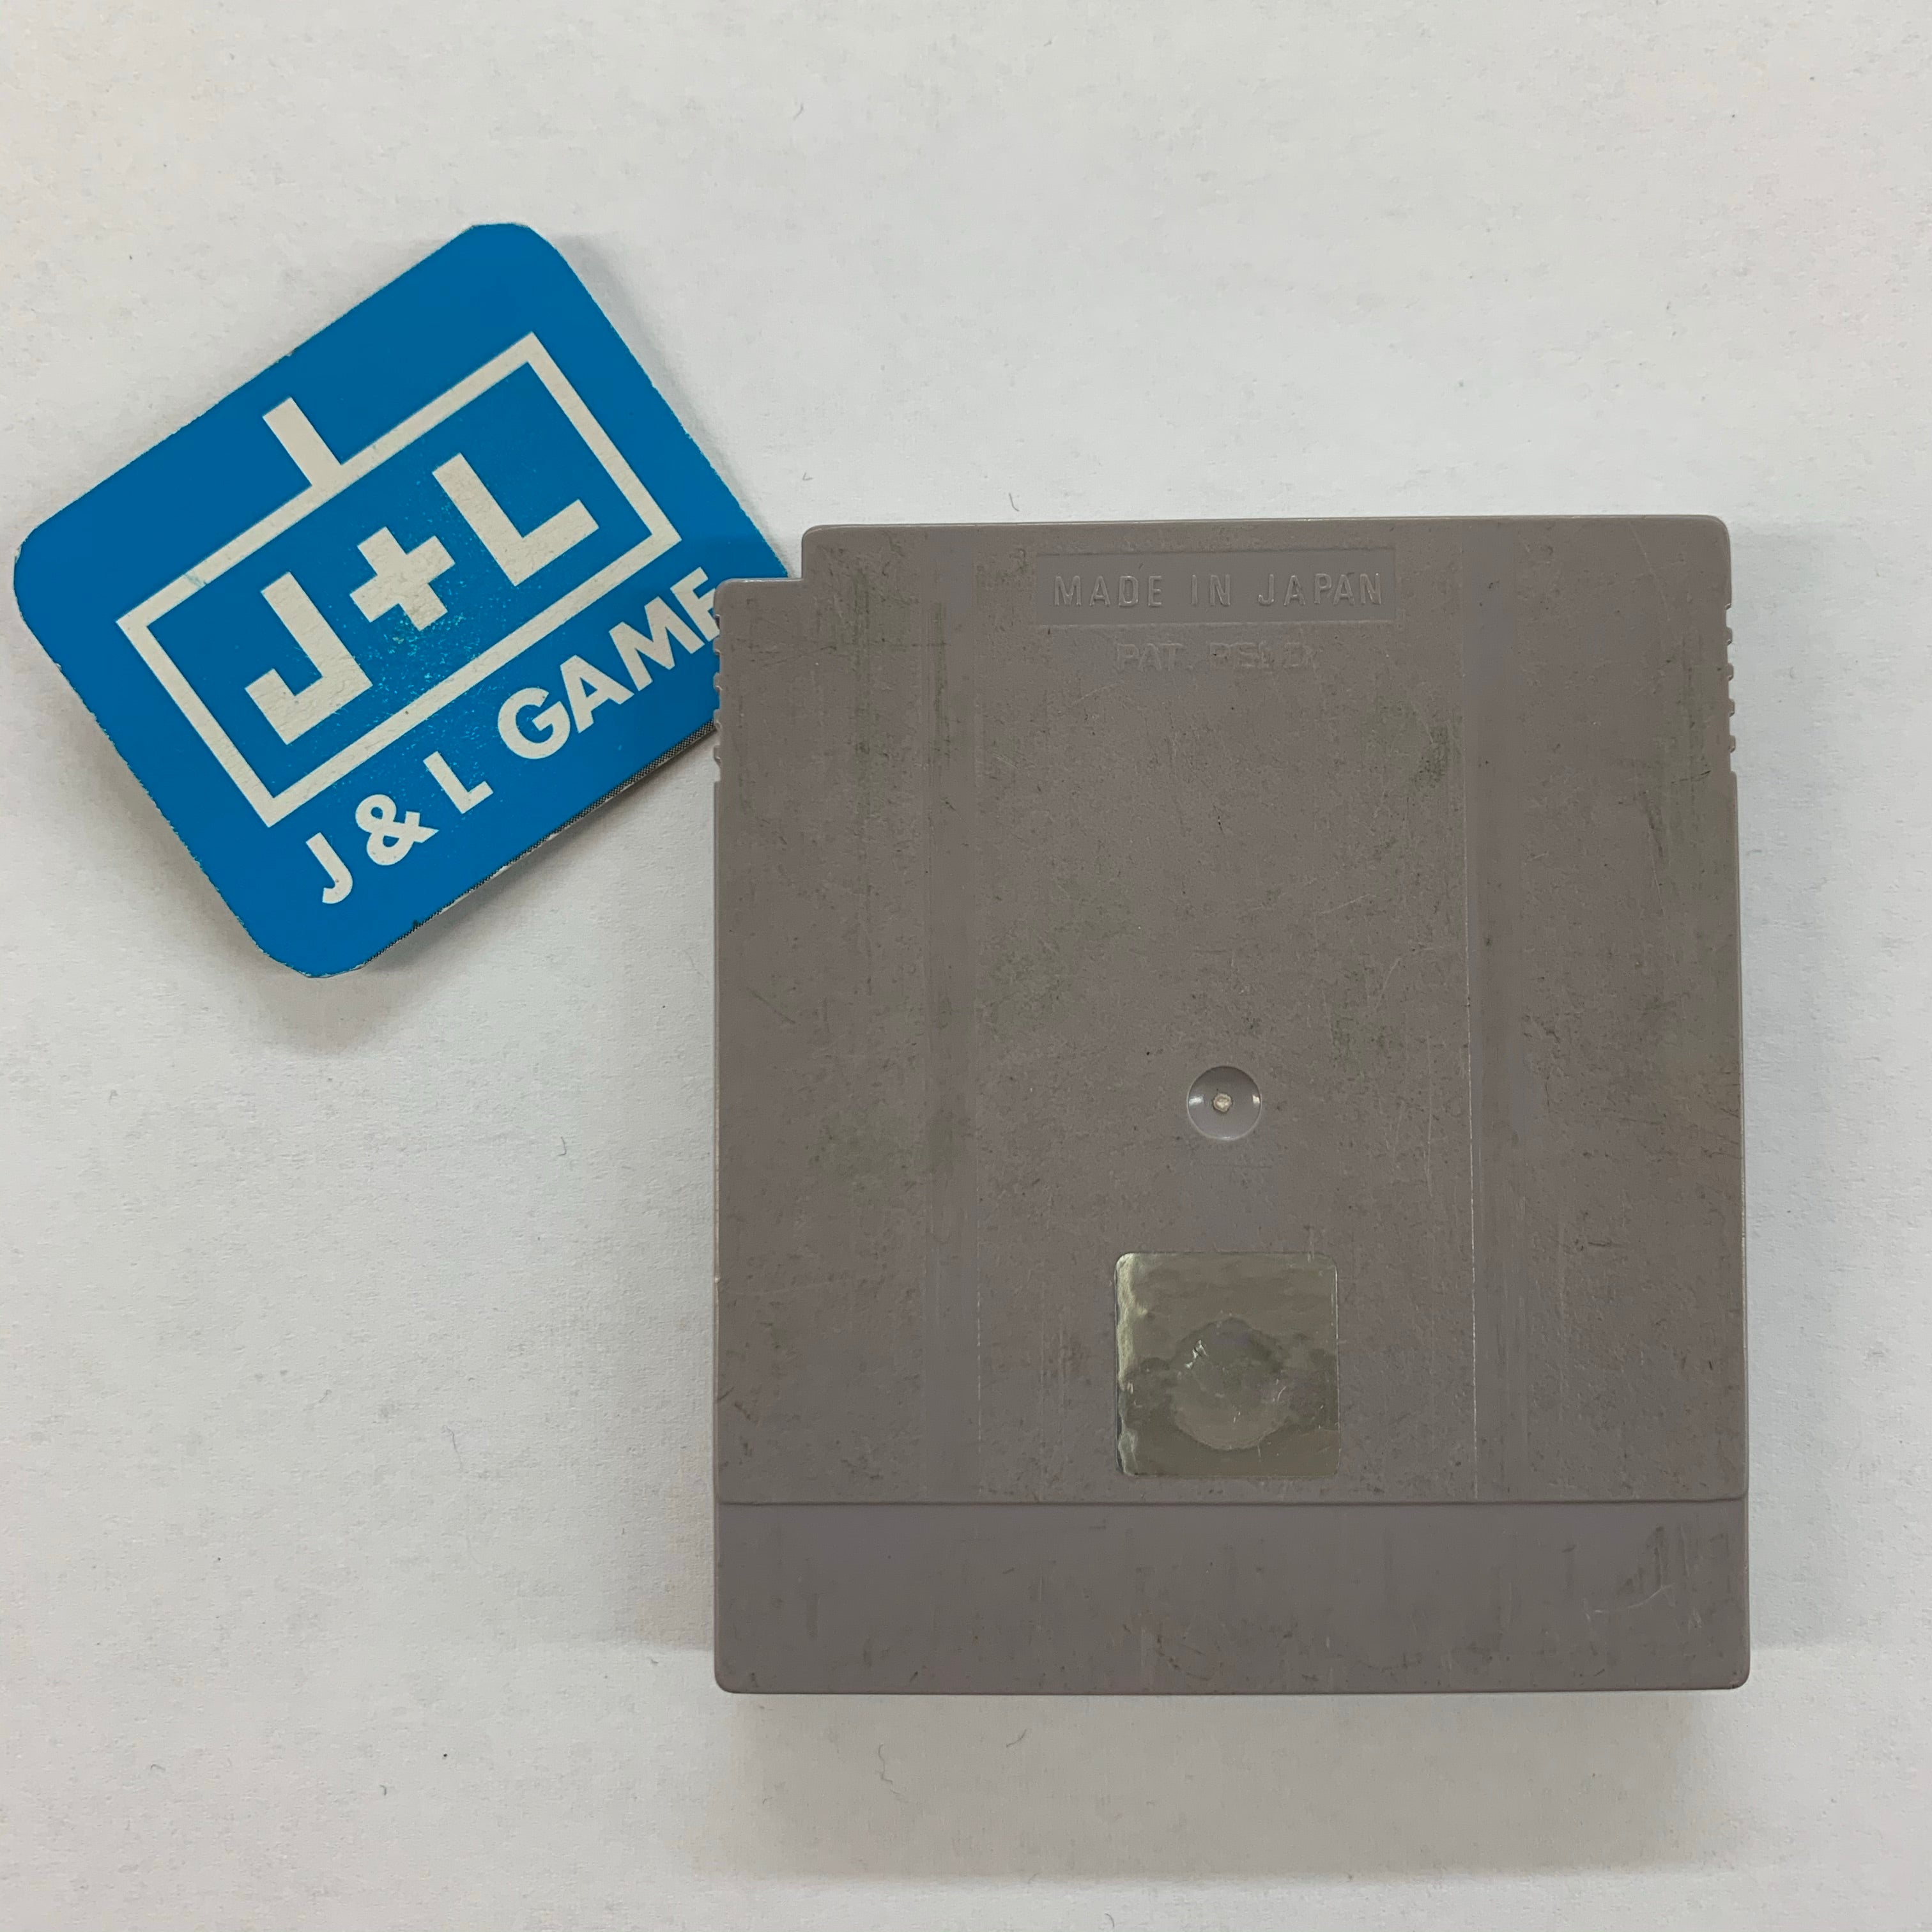 Micro Machines - (GB) Game Boy [Pre-Owned] Video Games Ocean   